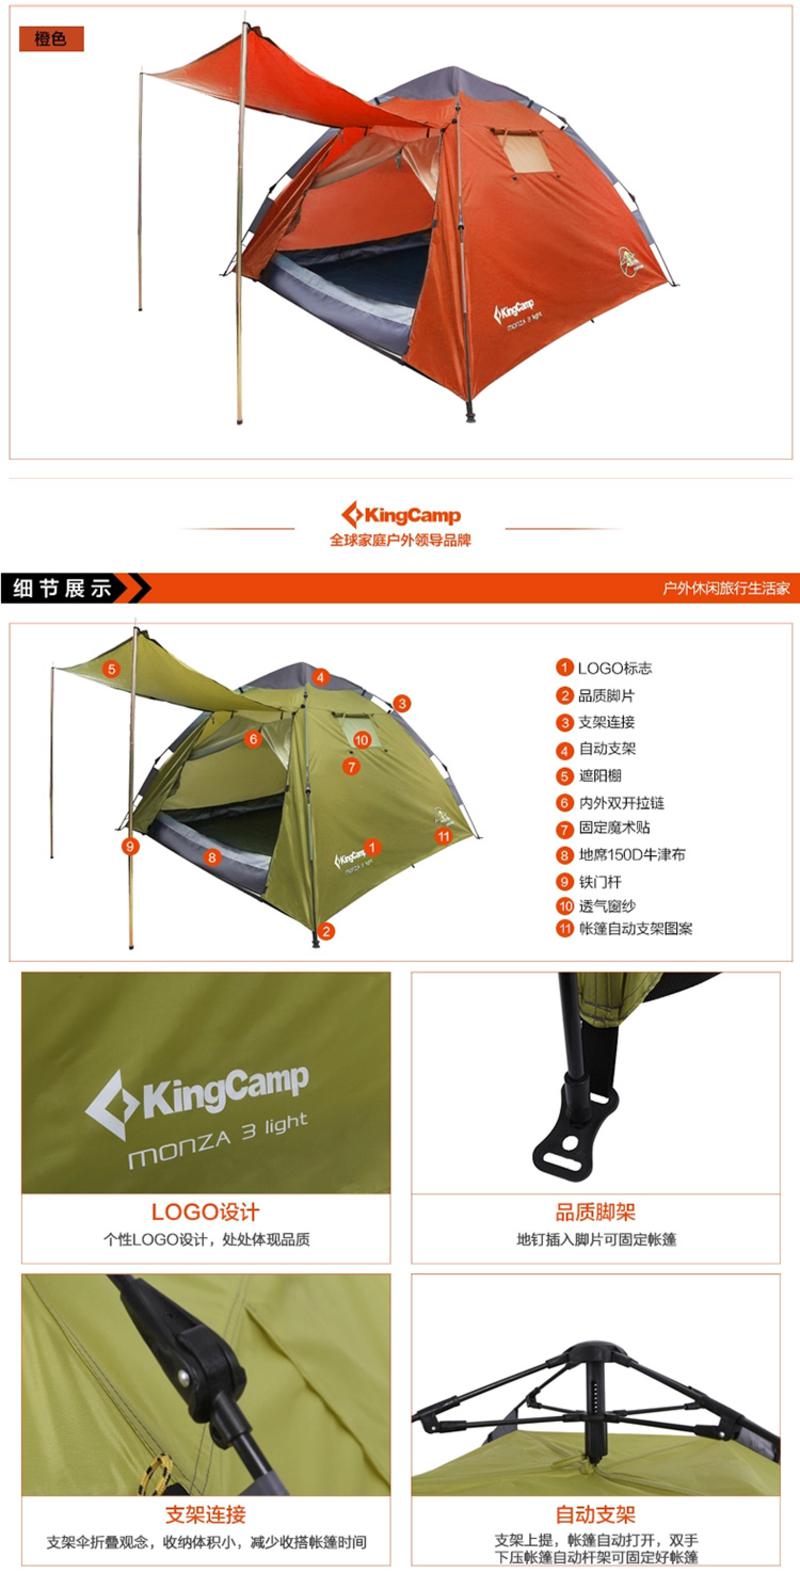 KingCamp/康尔 户外露营双人双层防风防雨三季帐篷 KT3081